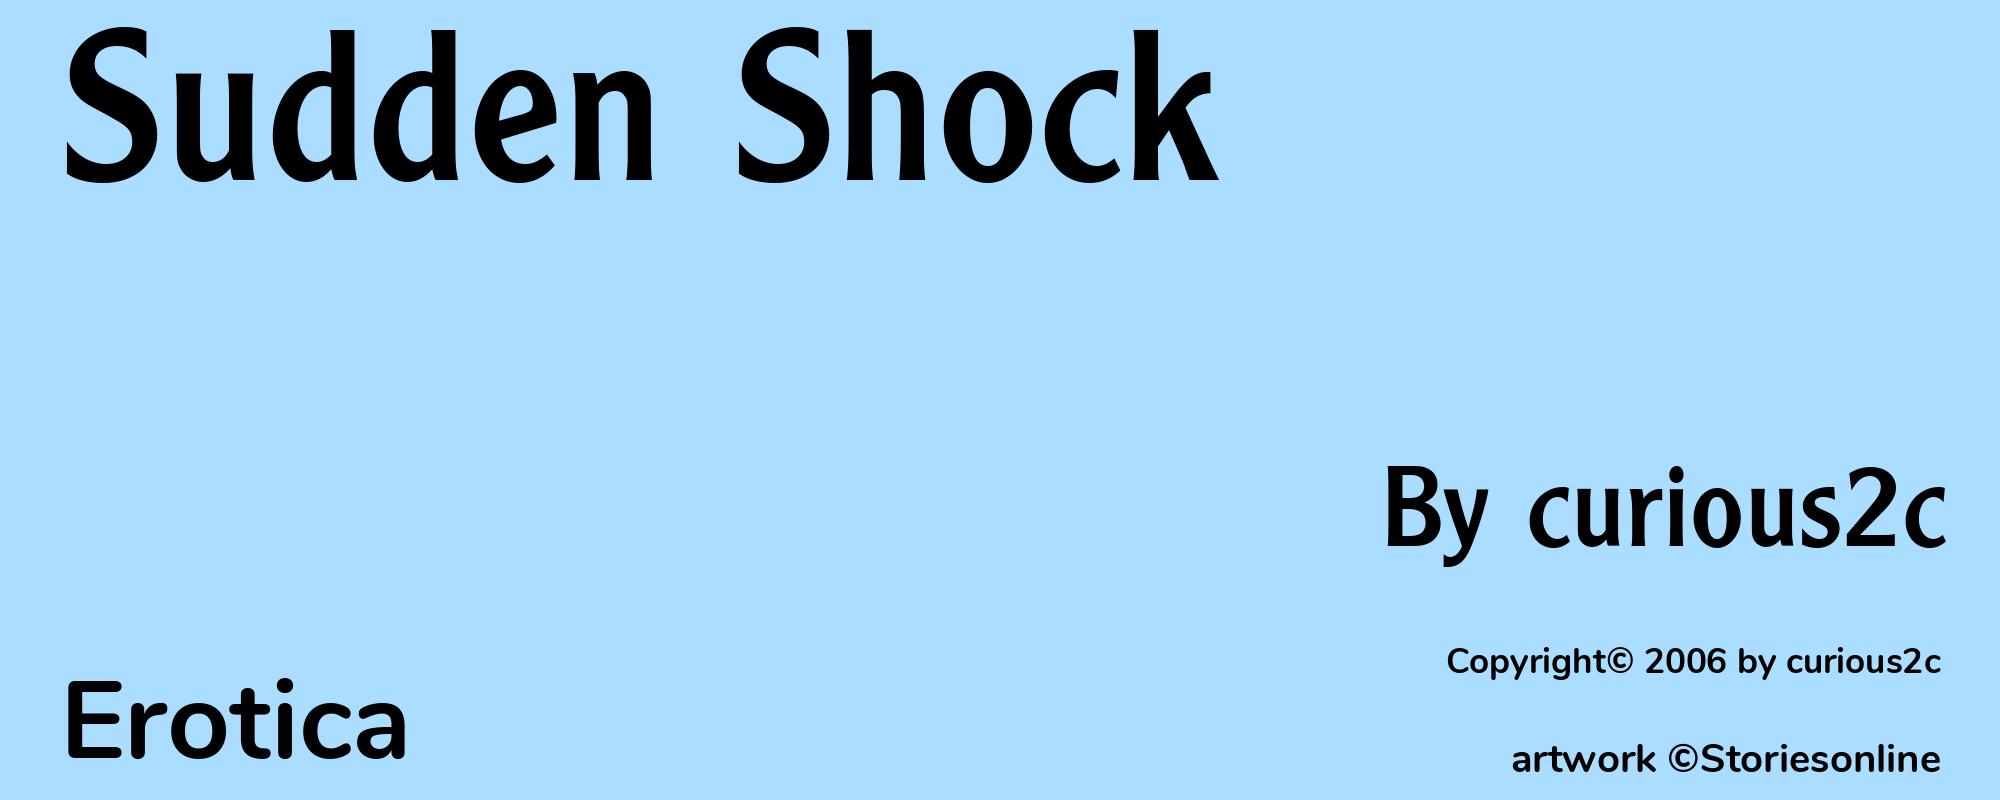 Sudden Shock - Cover